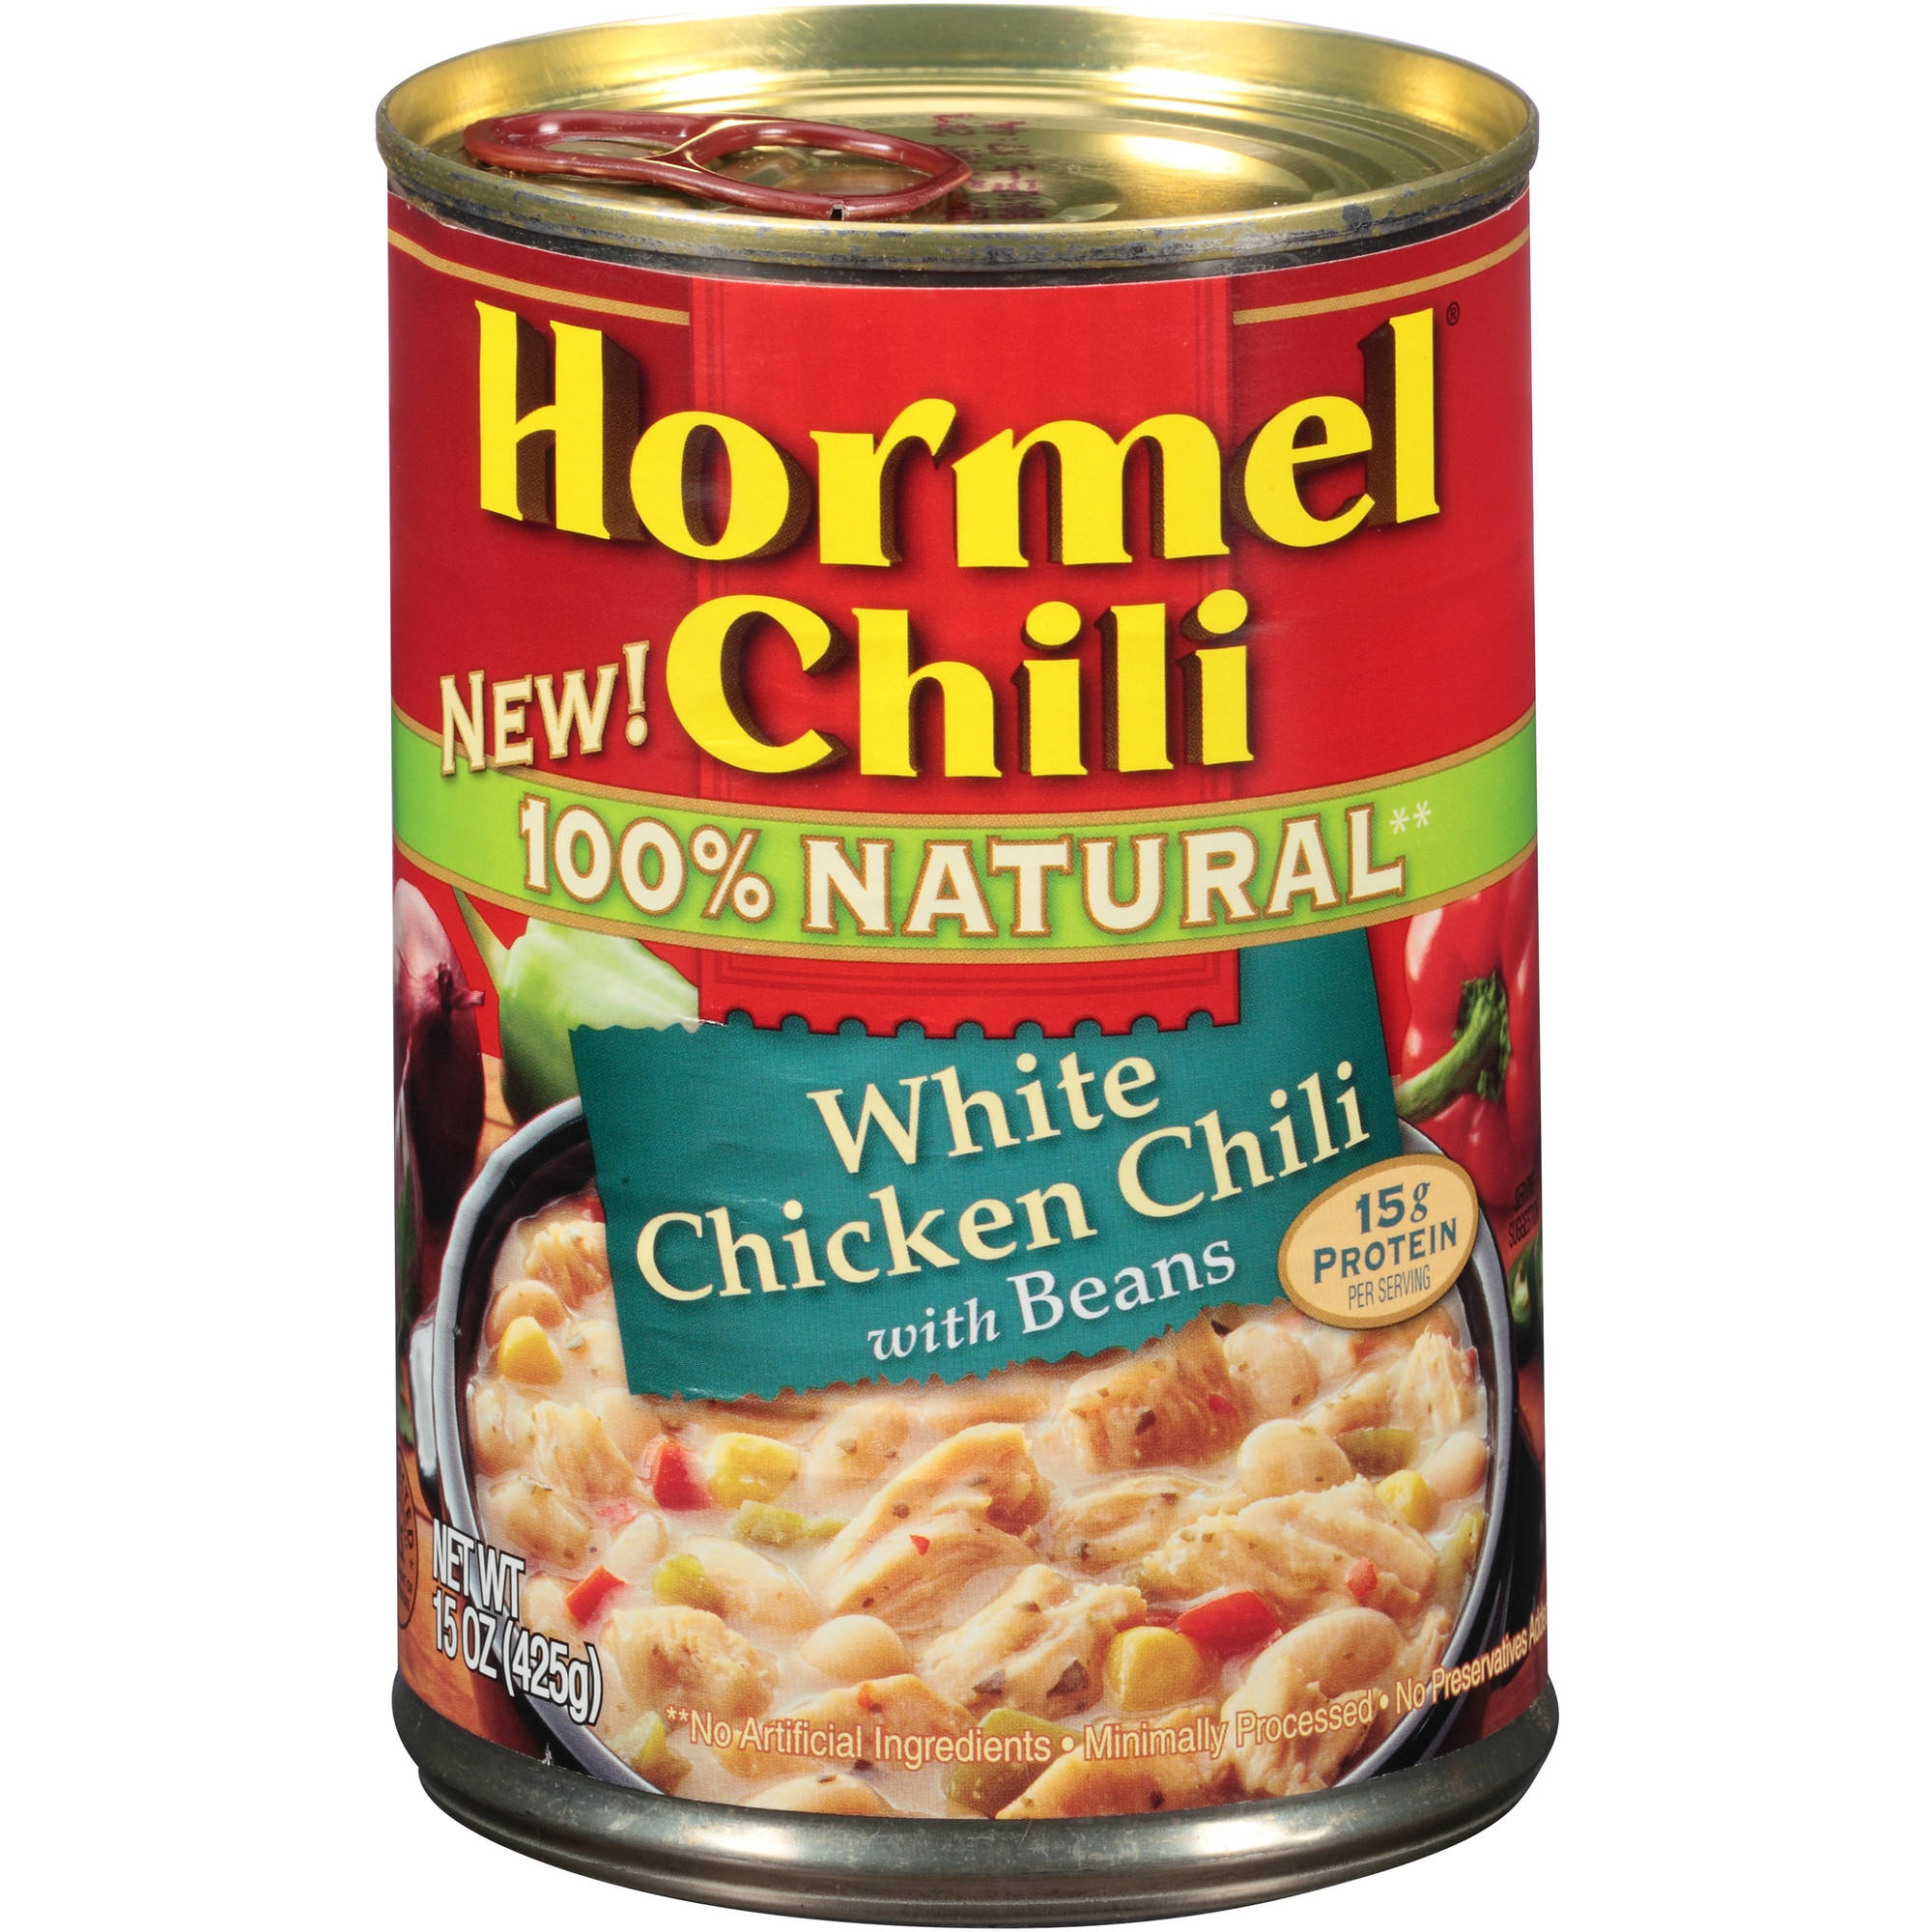 Hormel White Chicken Chili with Beans, 15 oz.